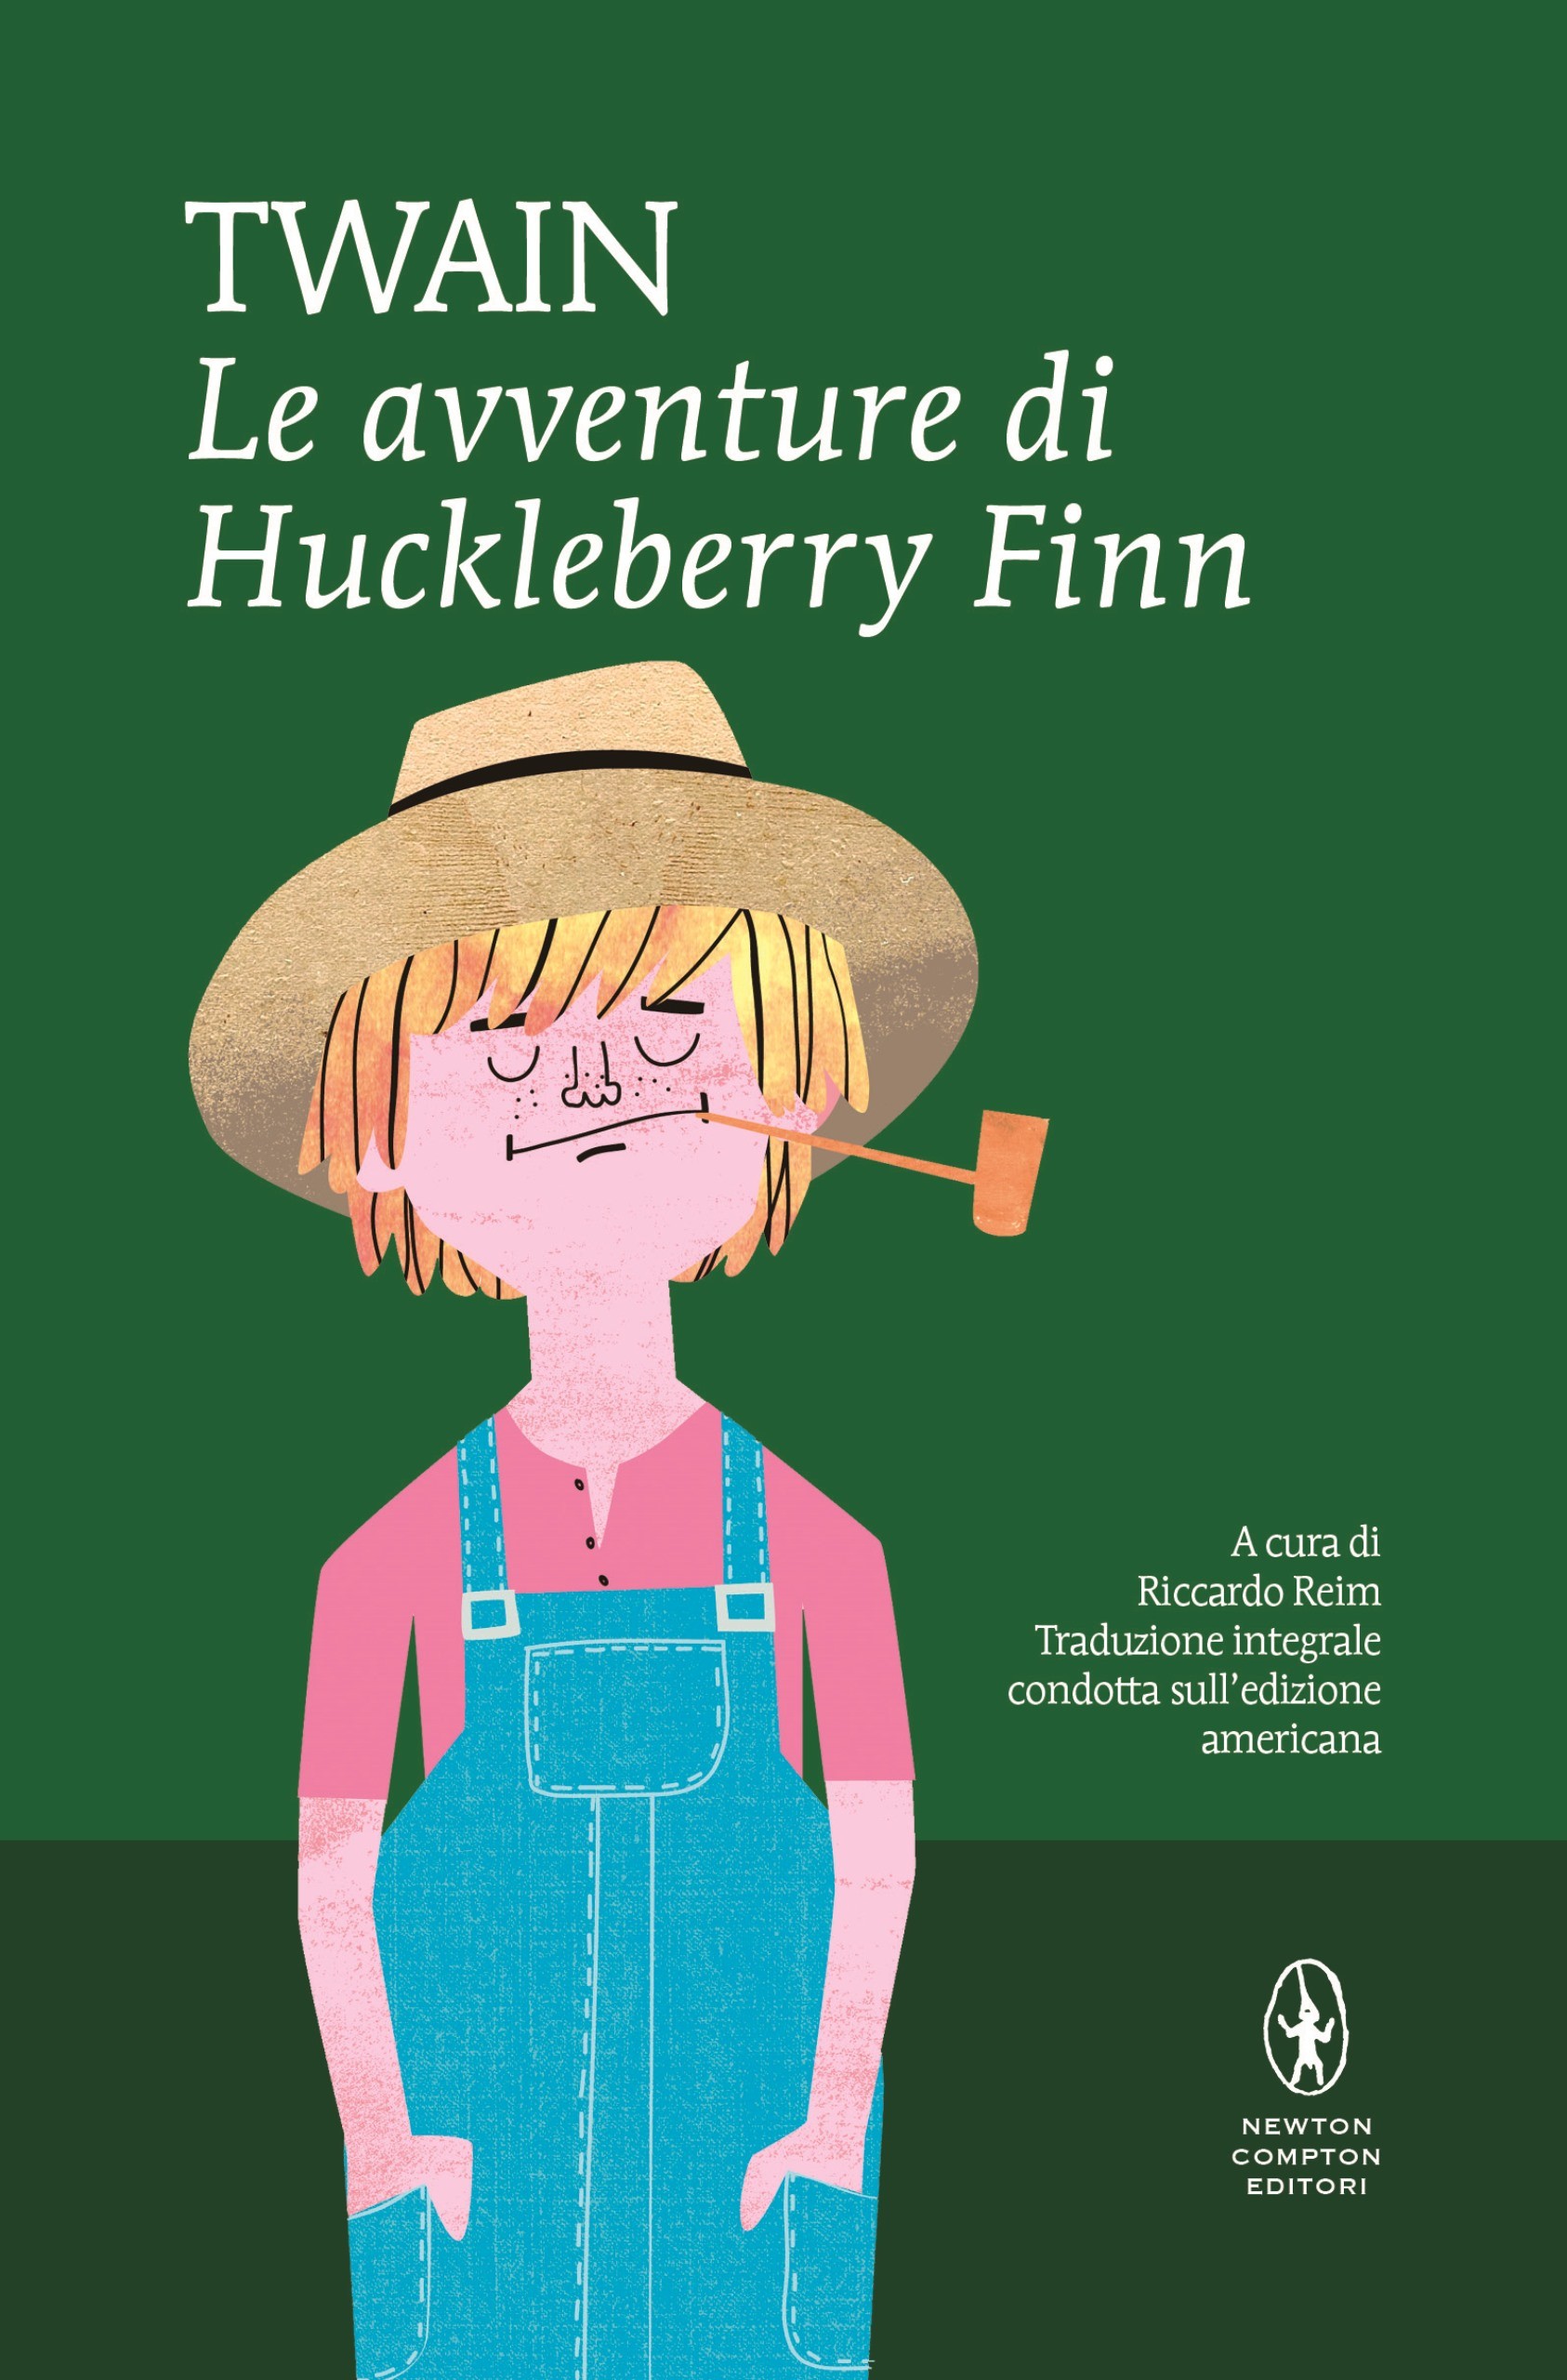 Le avventure di Huckleberry Finn - Librerie.coop